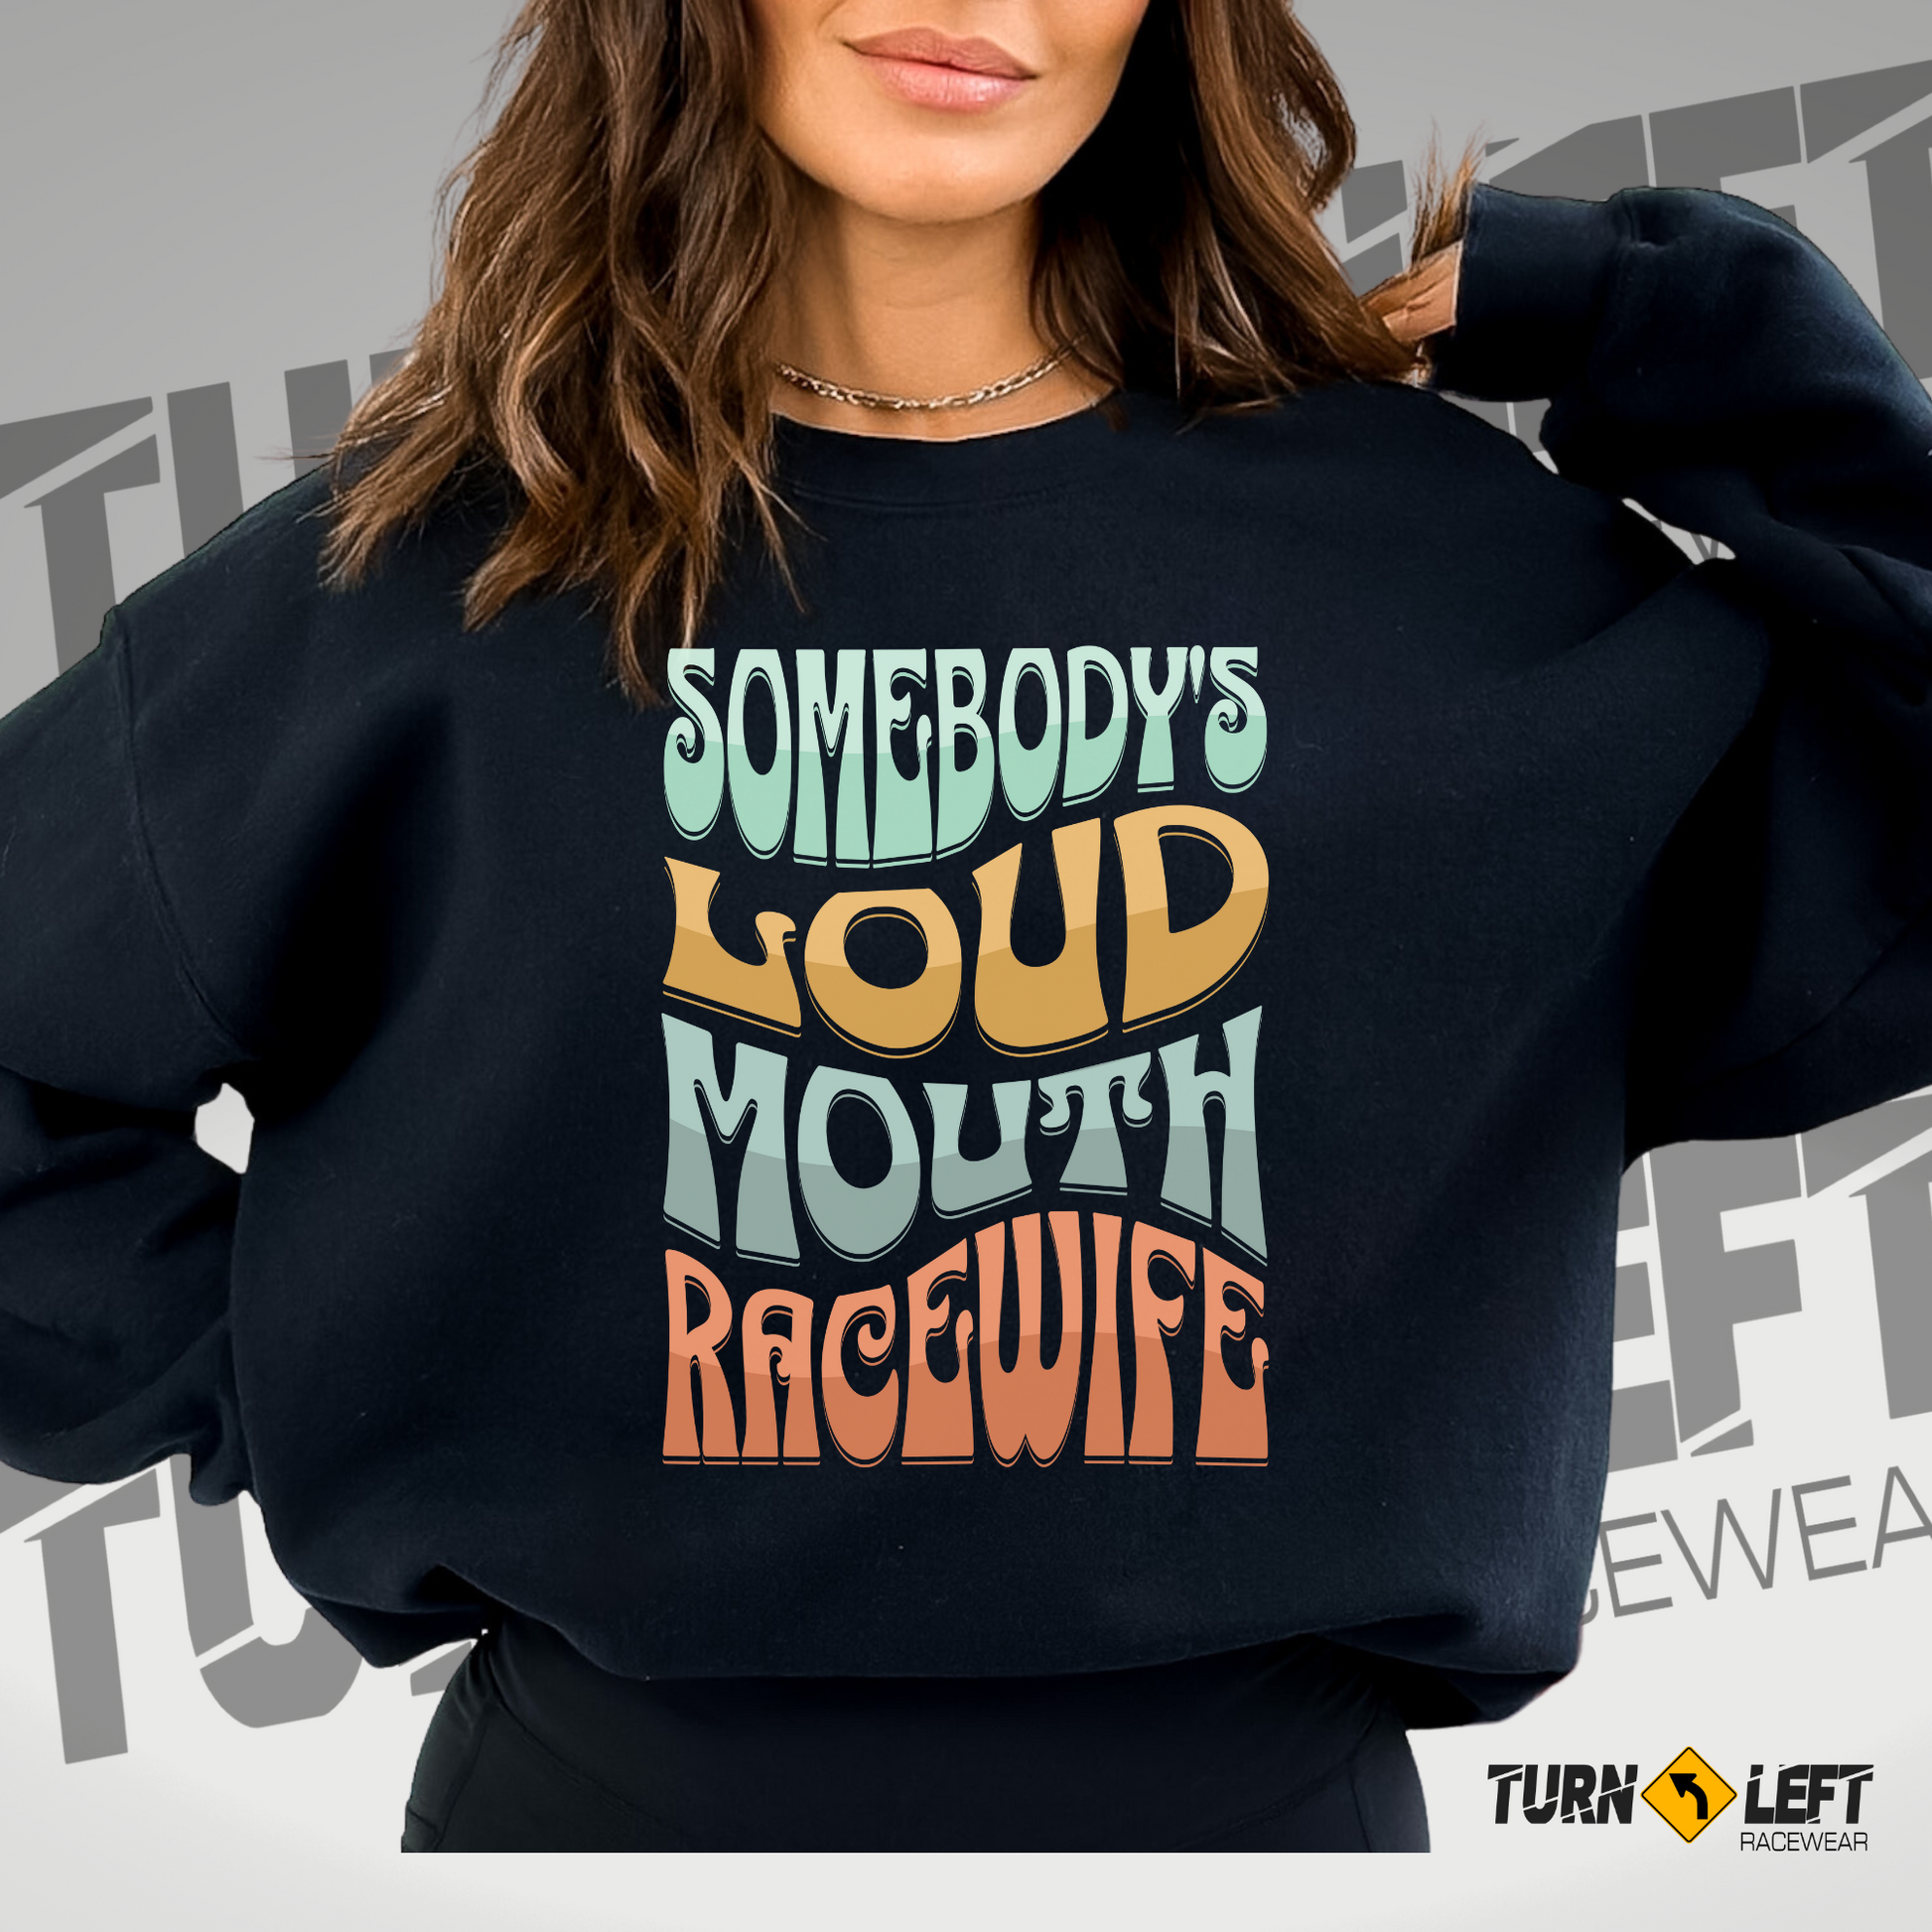 Somebody's Loud Mouth Race Wife Sweatshirts, Women's dirt track racing sweatshirts